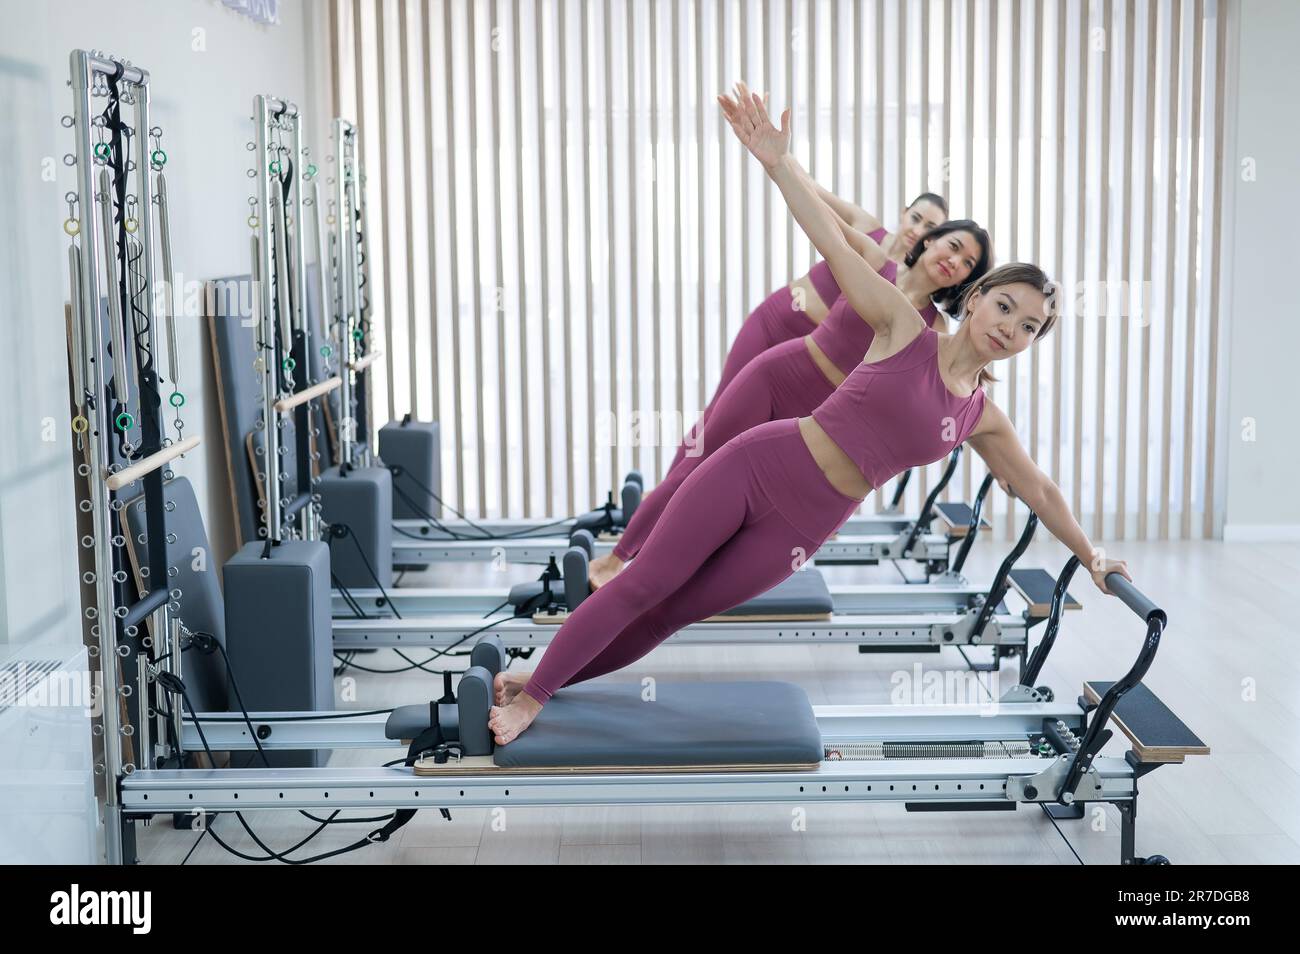 https://c8.alamy.com/comp/2R7DGB8/three-asian-women-in-pink-sportswear-doing-side-planks-on-a-reformer-pilates-classes-2R7DGB8.jpg